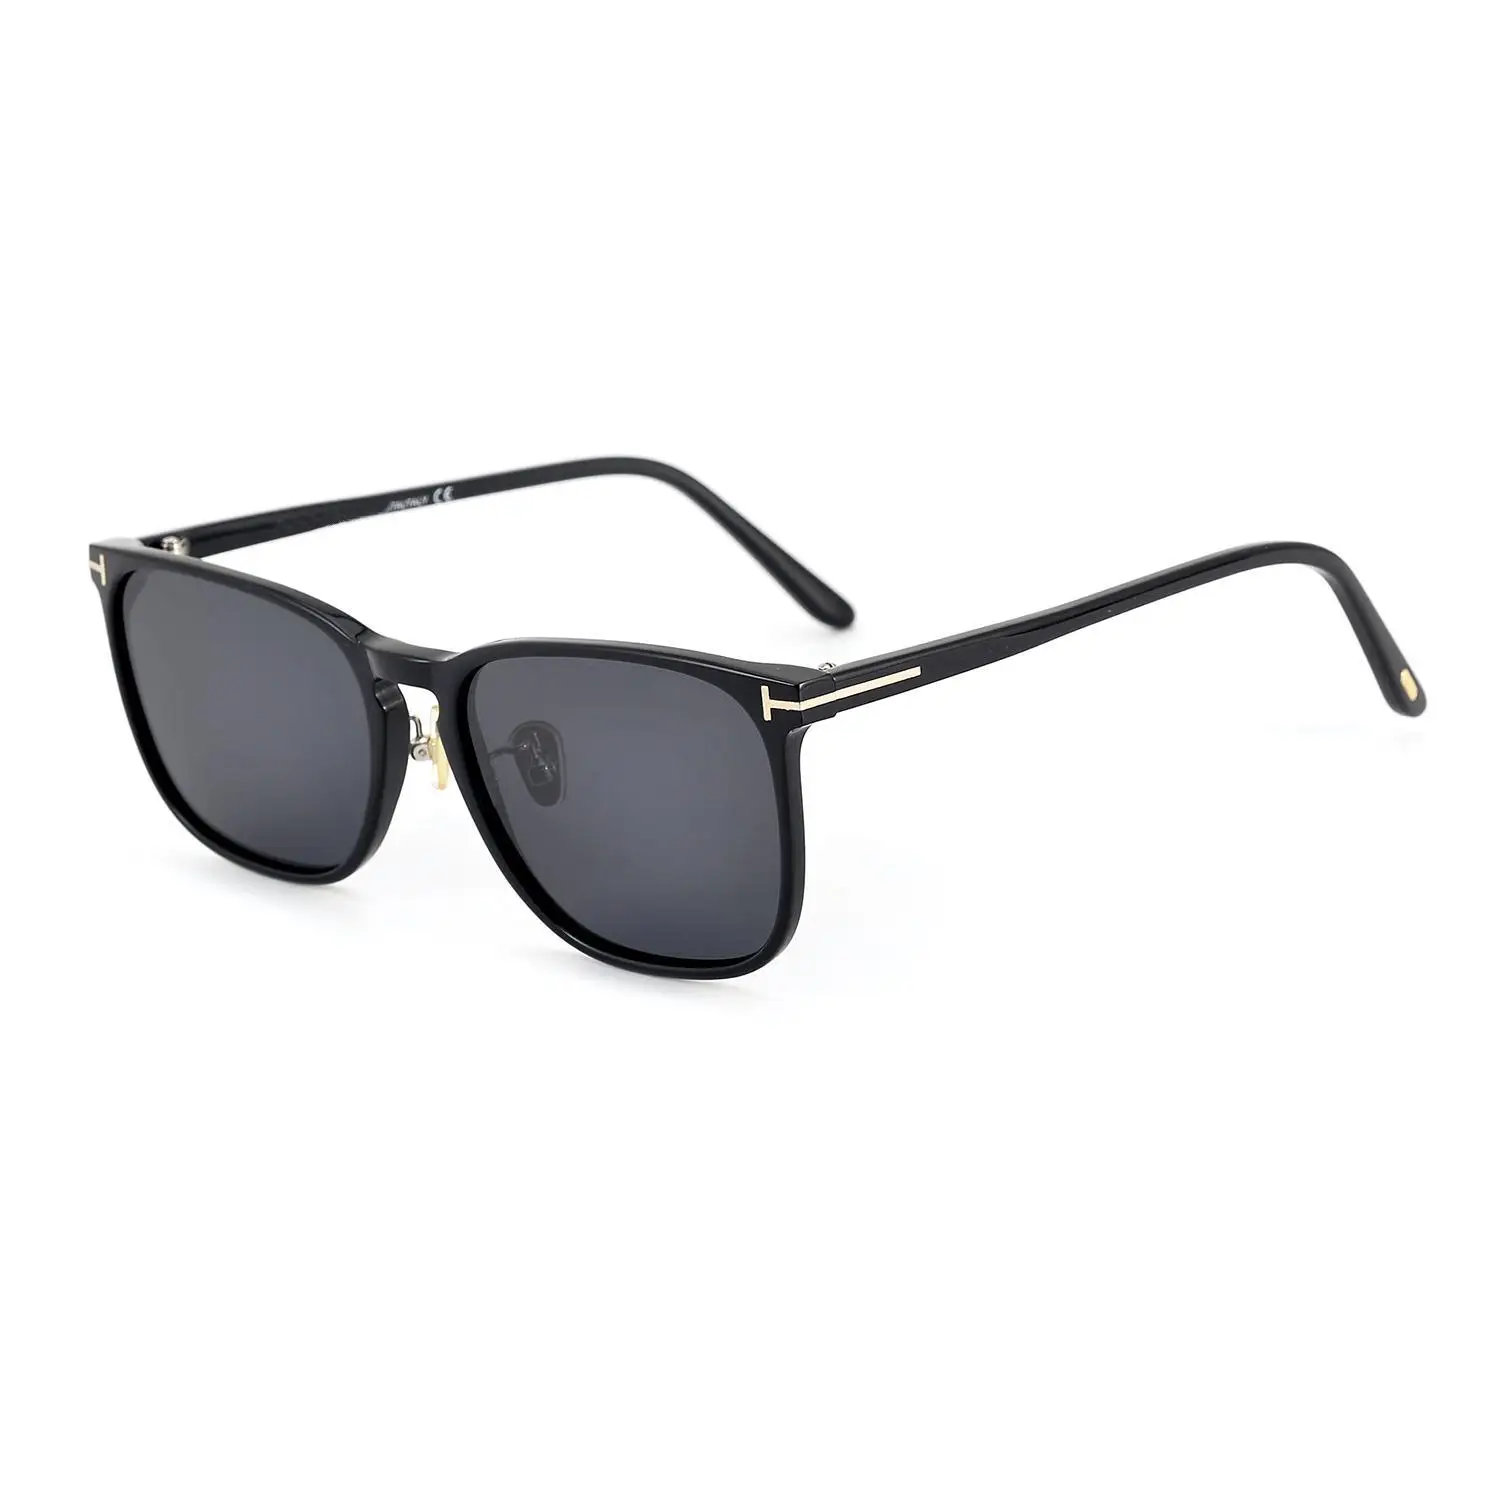 Sunglasses Men's Brown Classic Fashion UV400 Acetate Star Talent Women's Outdoor Travel Polarization Glasses Original Box